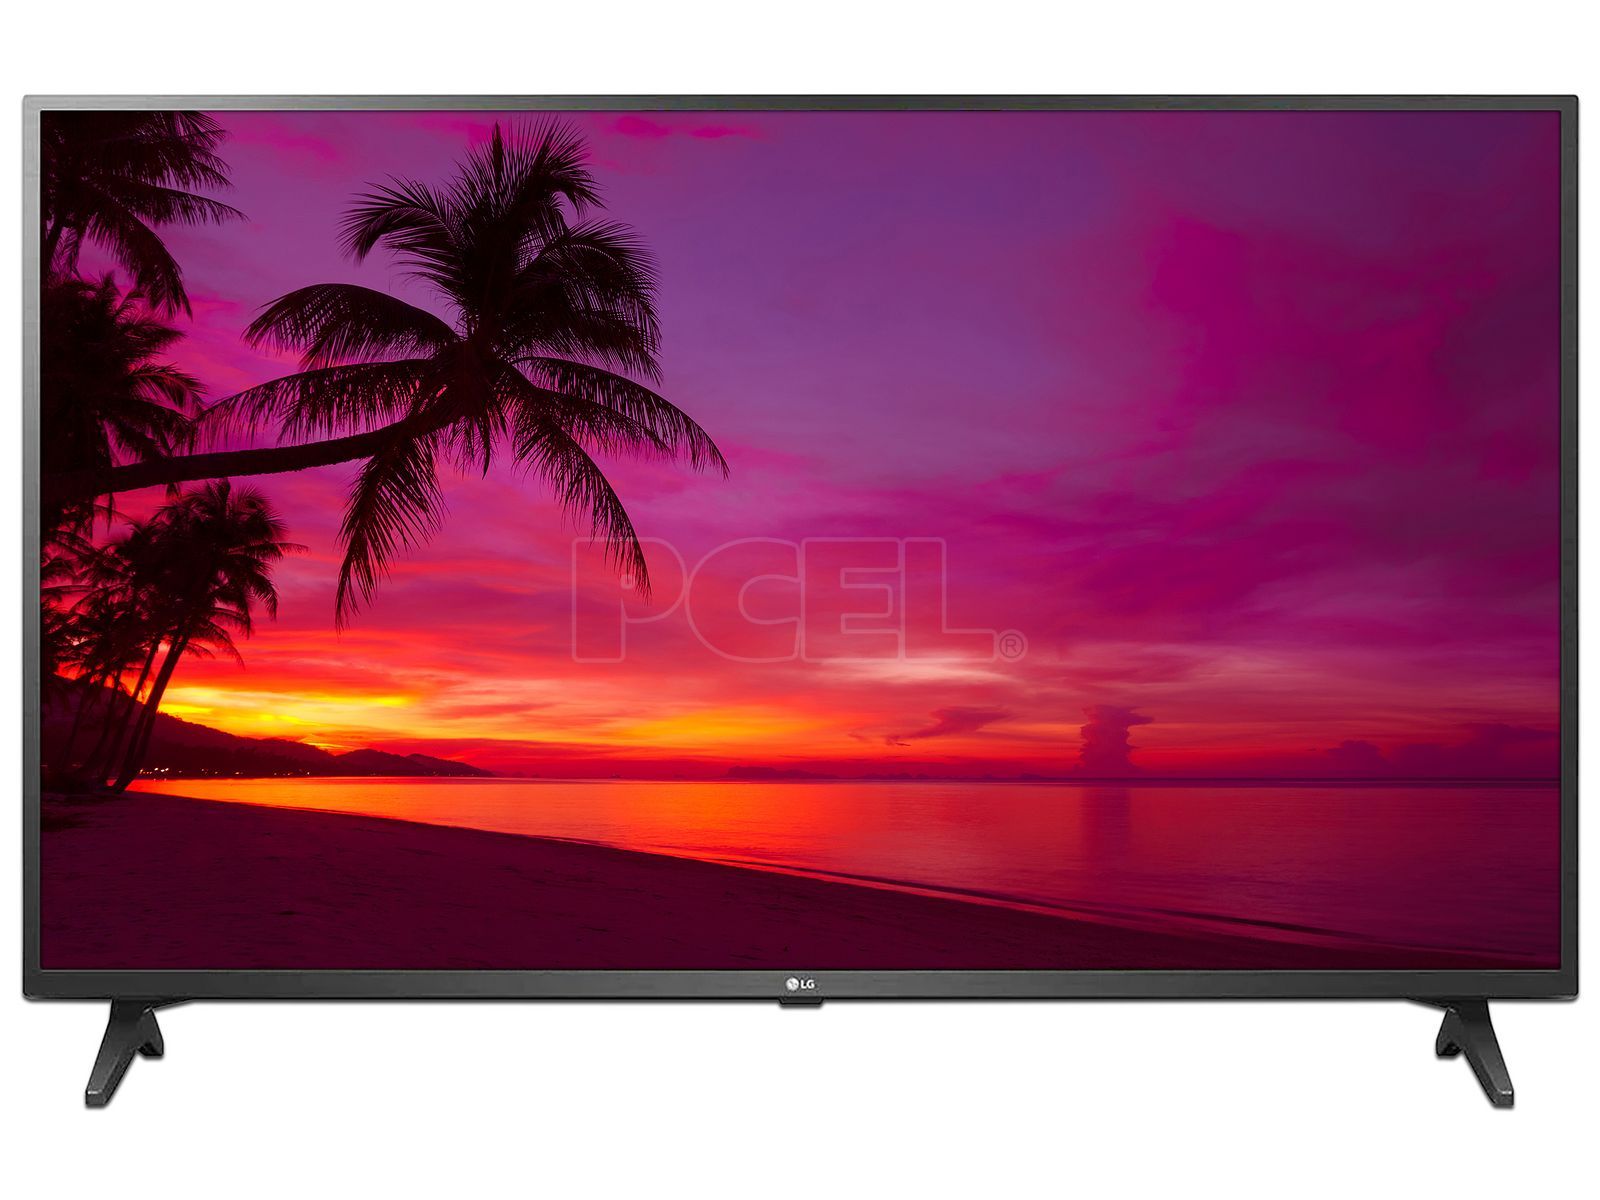 TV LG 50 Pulgadas 4K UHD AI ThinQ Smart TV LED 50UN69513ZU